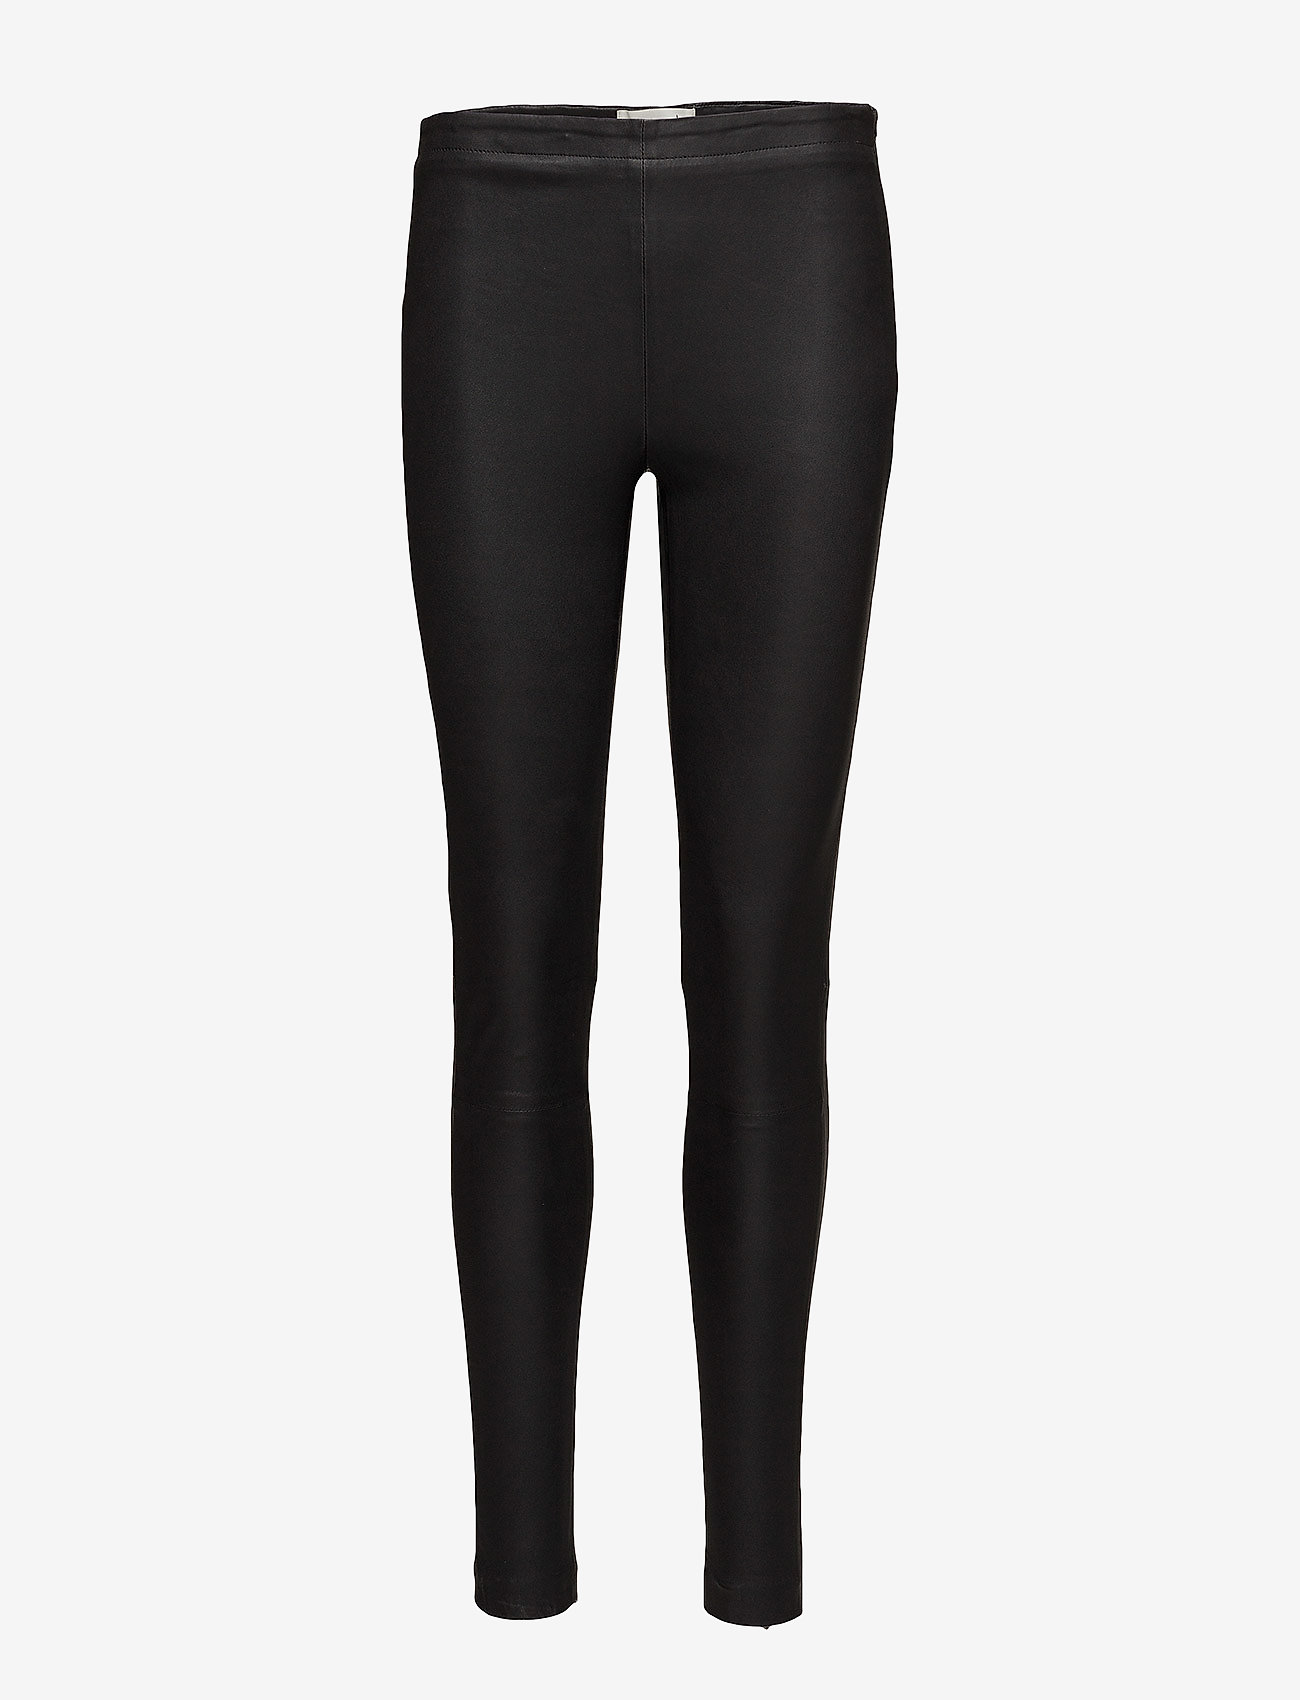 Rosemunde - Leather trousers - spodnie skórzane - black - 0